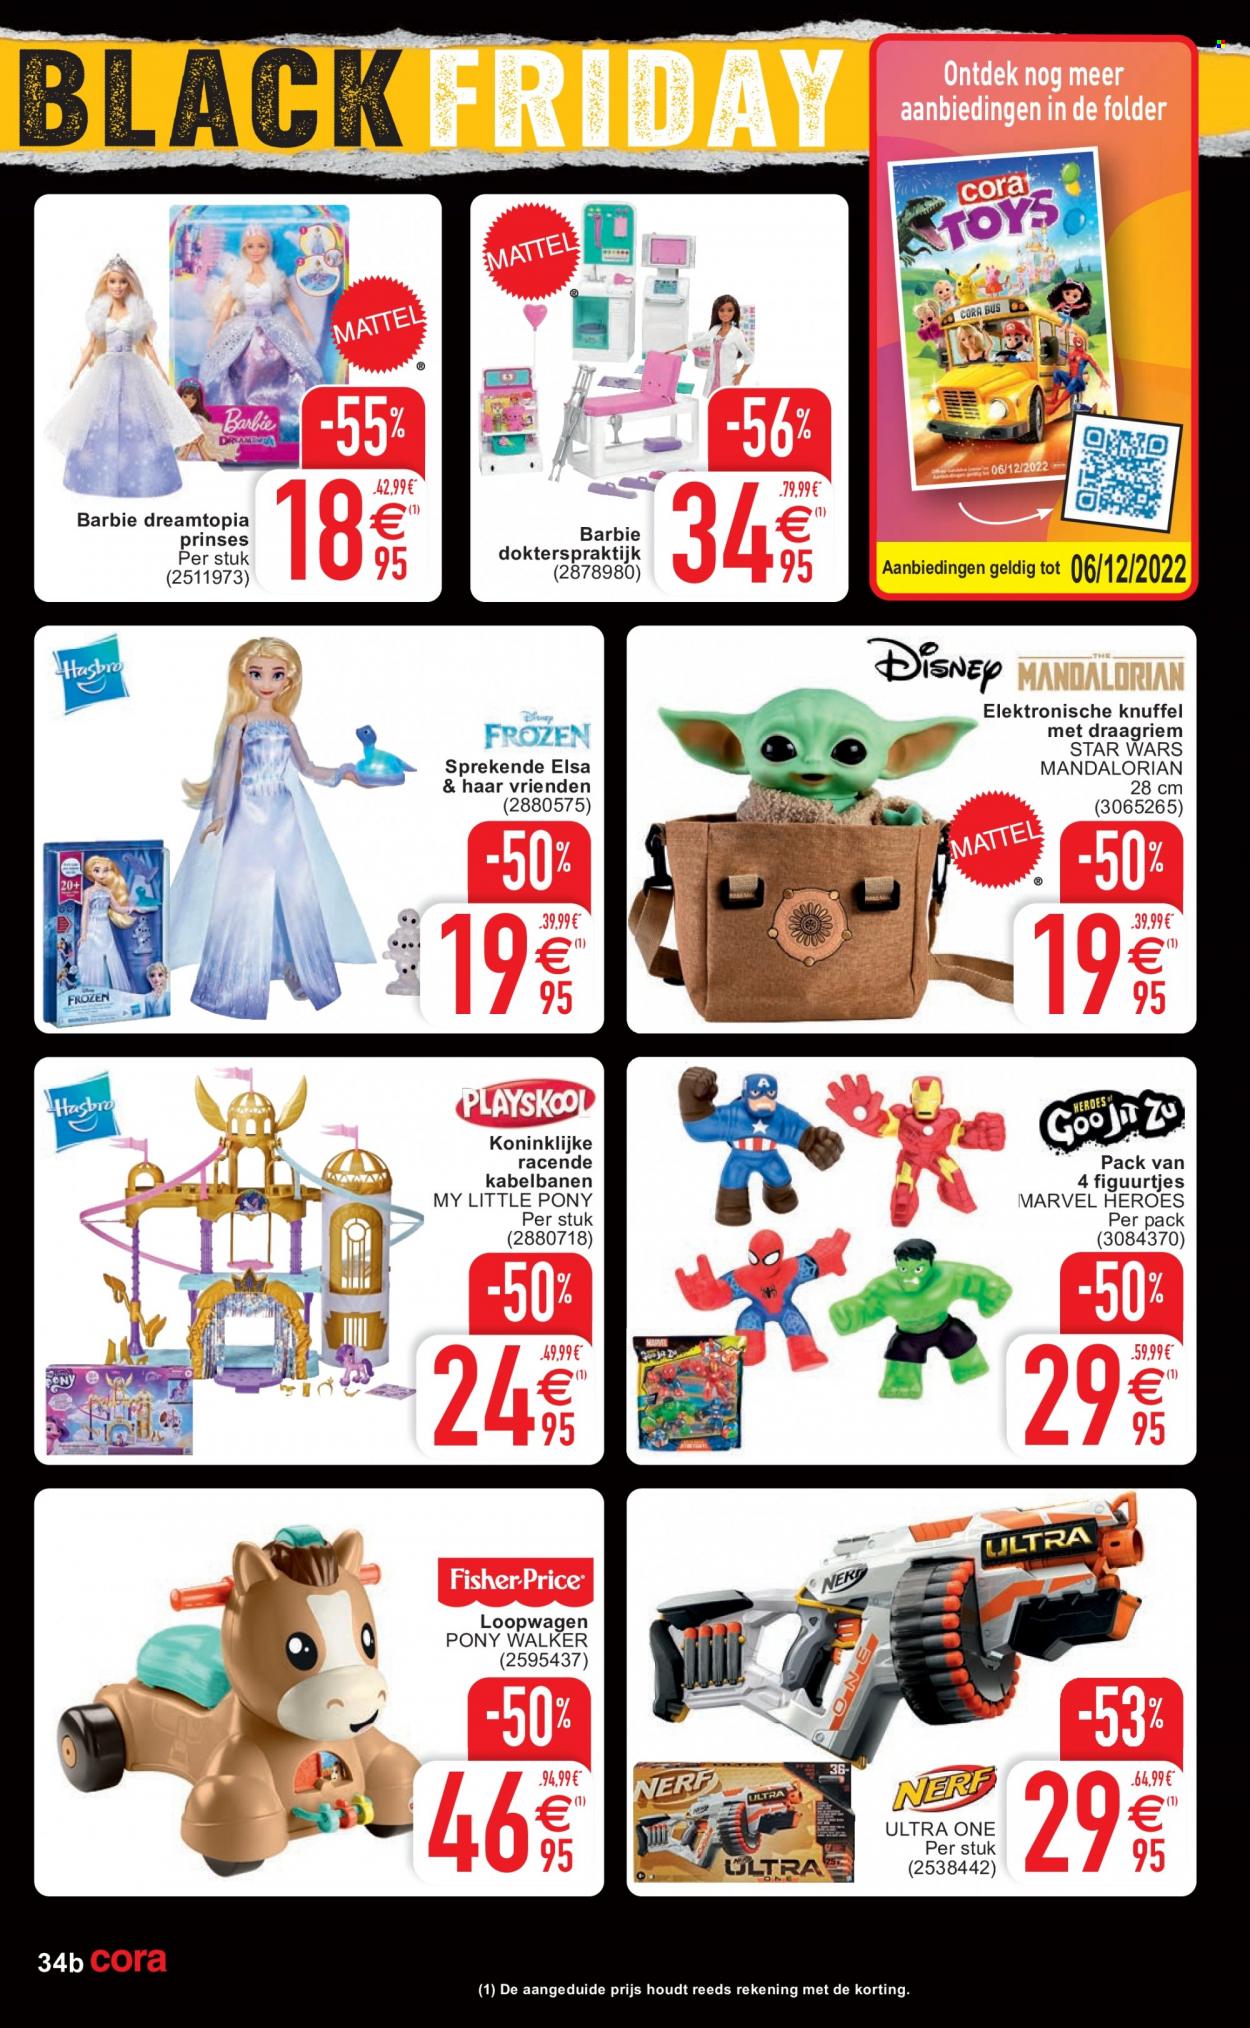 thumbnail - Cora-aanbieding - 22/11/2022 - 28/11/2022 -  producten in de aanbieding - Disney, Frozen, Fisher-Price, Barbie, Sony, Hasbro, knuffel, Nerf. Pagina 34.